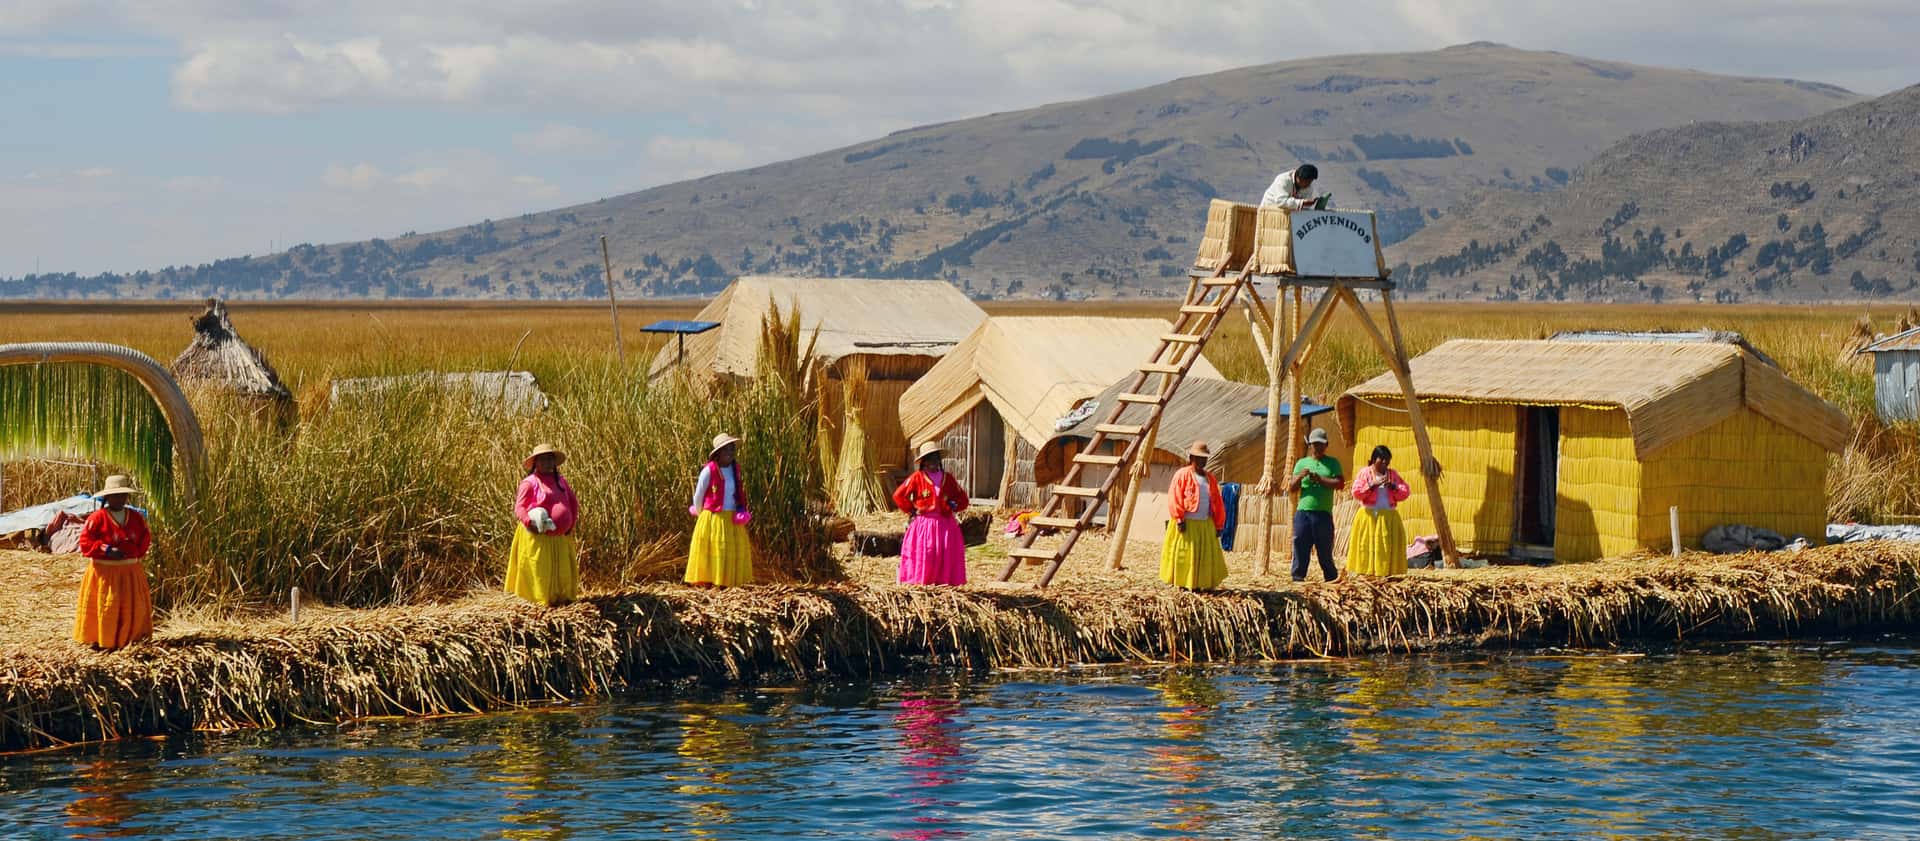 Titicaca Lake - Top 10 best places to visit in Peru